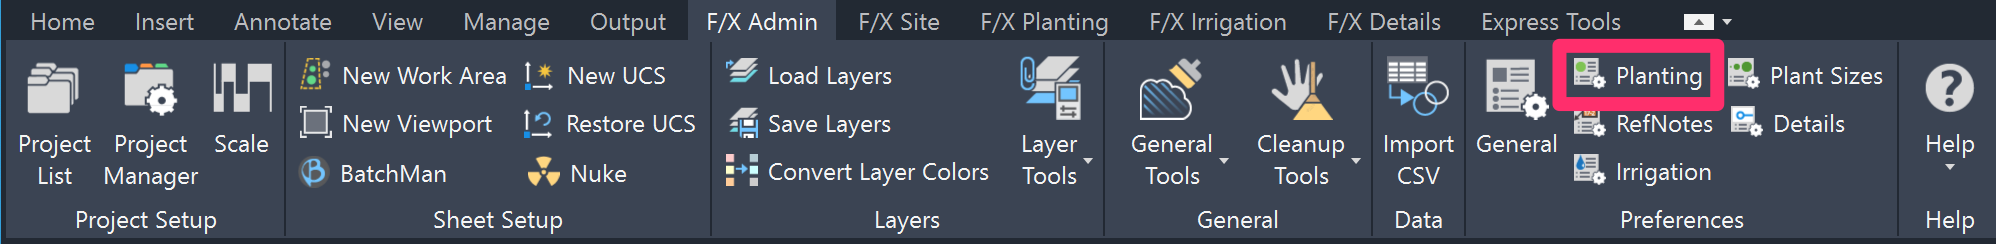 F/X Admin ribbon, Planting button